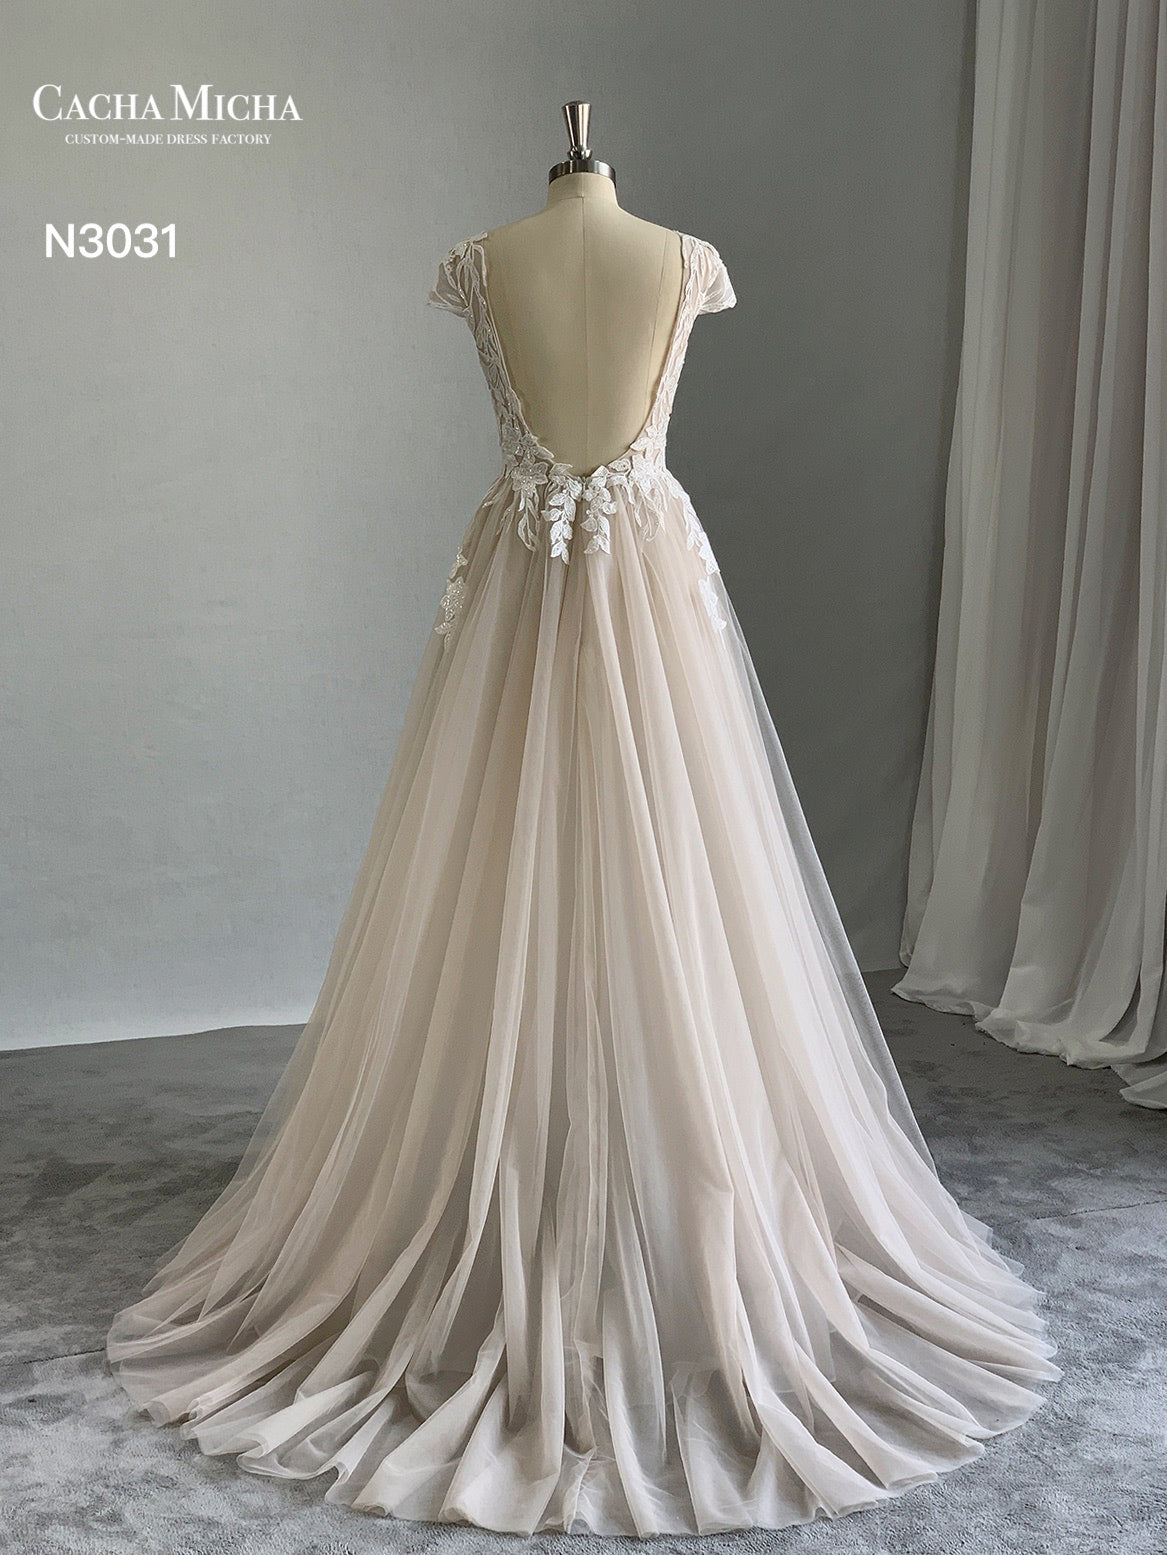 Cap Sleeves Lace Backless Side Slit Champagne Wedding Dress N3031